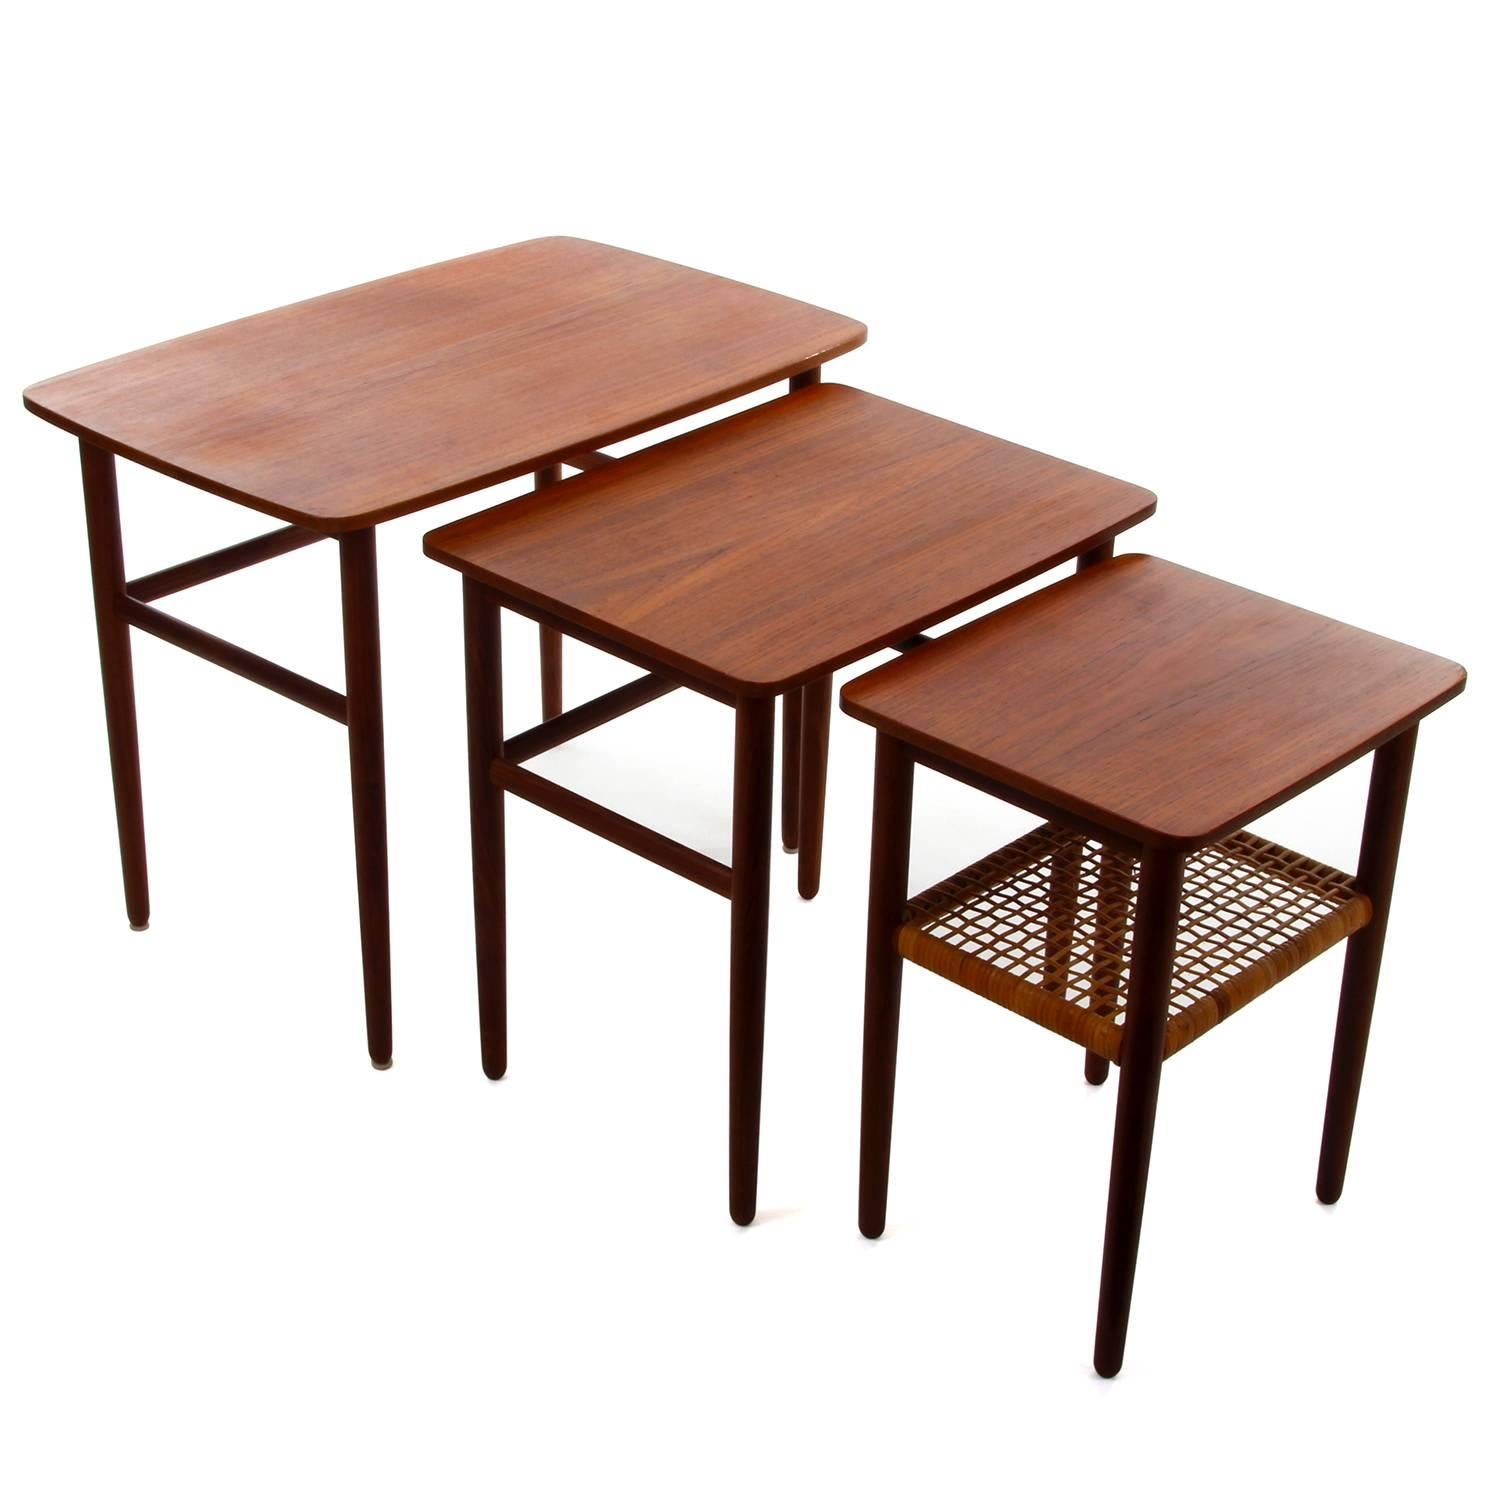 Scandinavian Modern Teak and Rosewood Nesting Tables, 1950s, Danish Mid-Century Modern Nested Tables